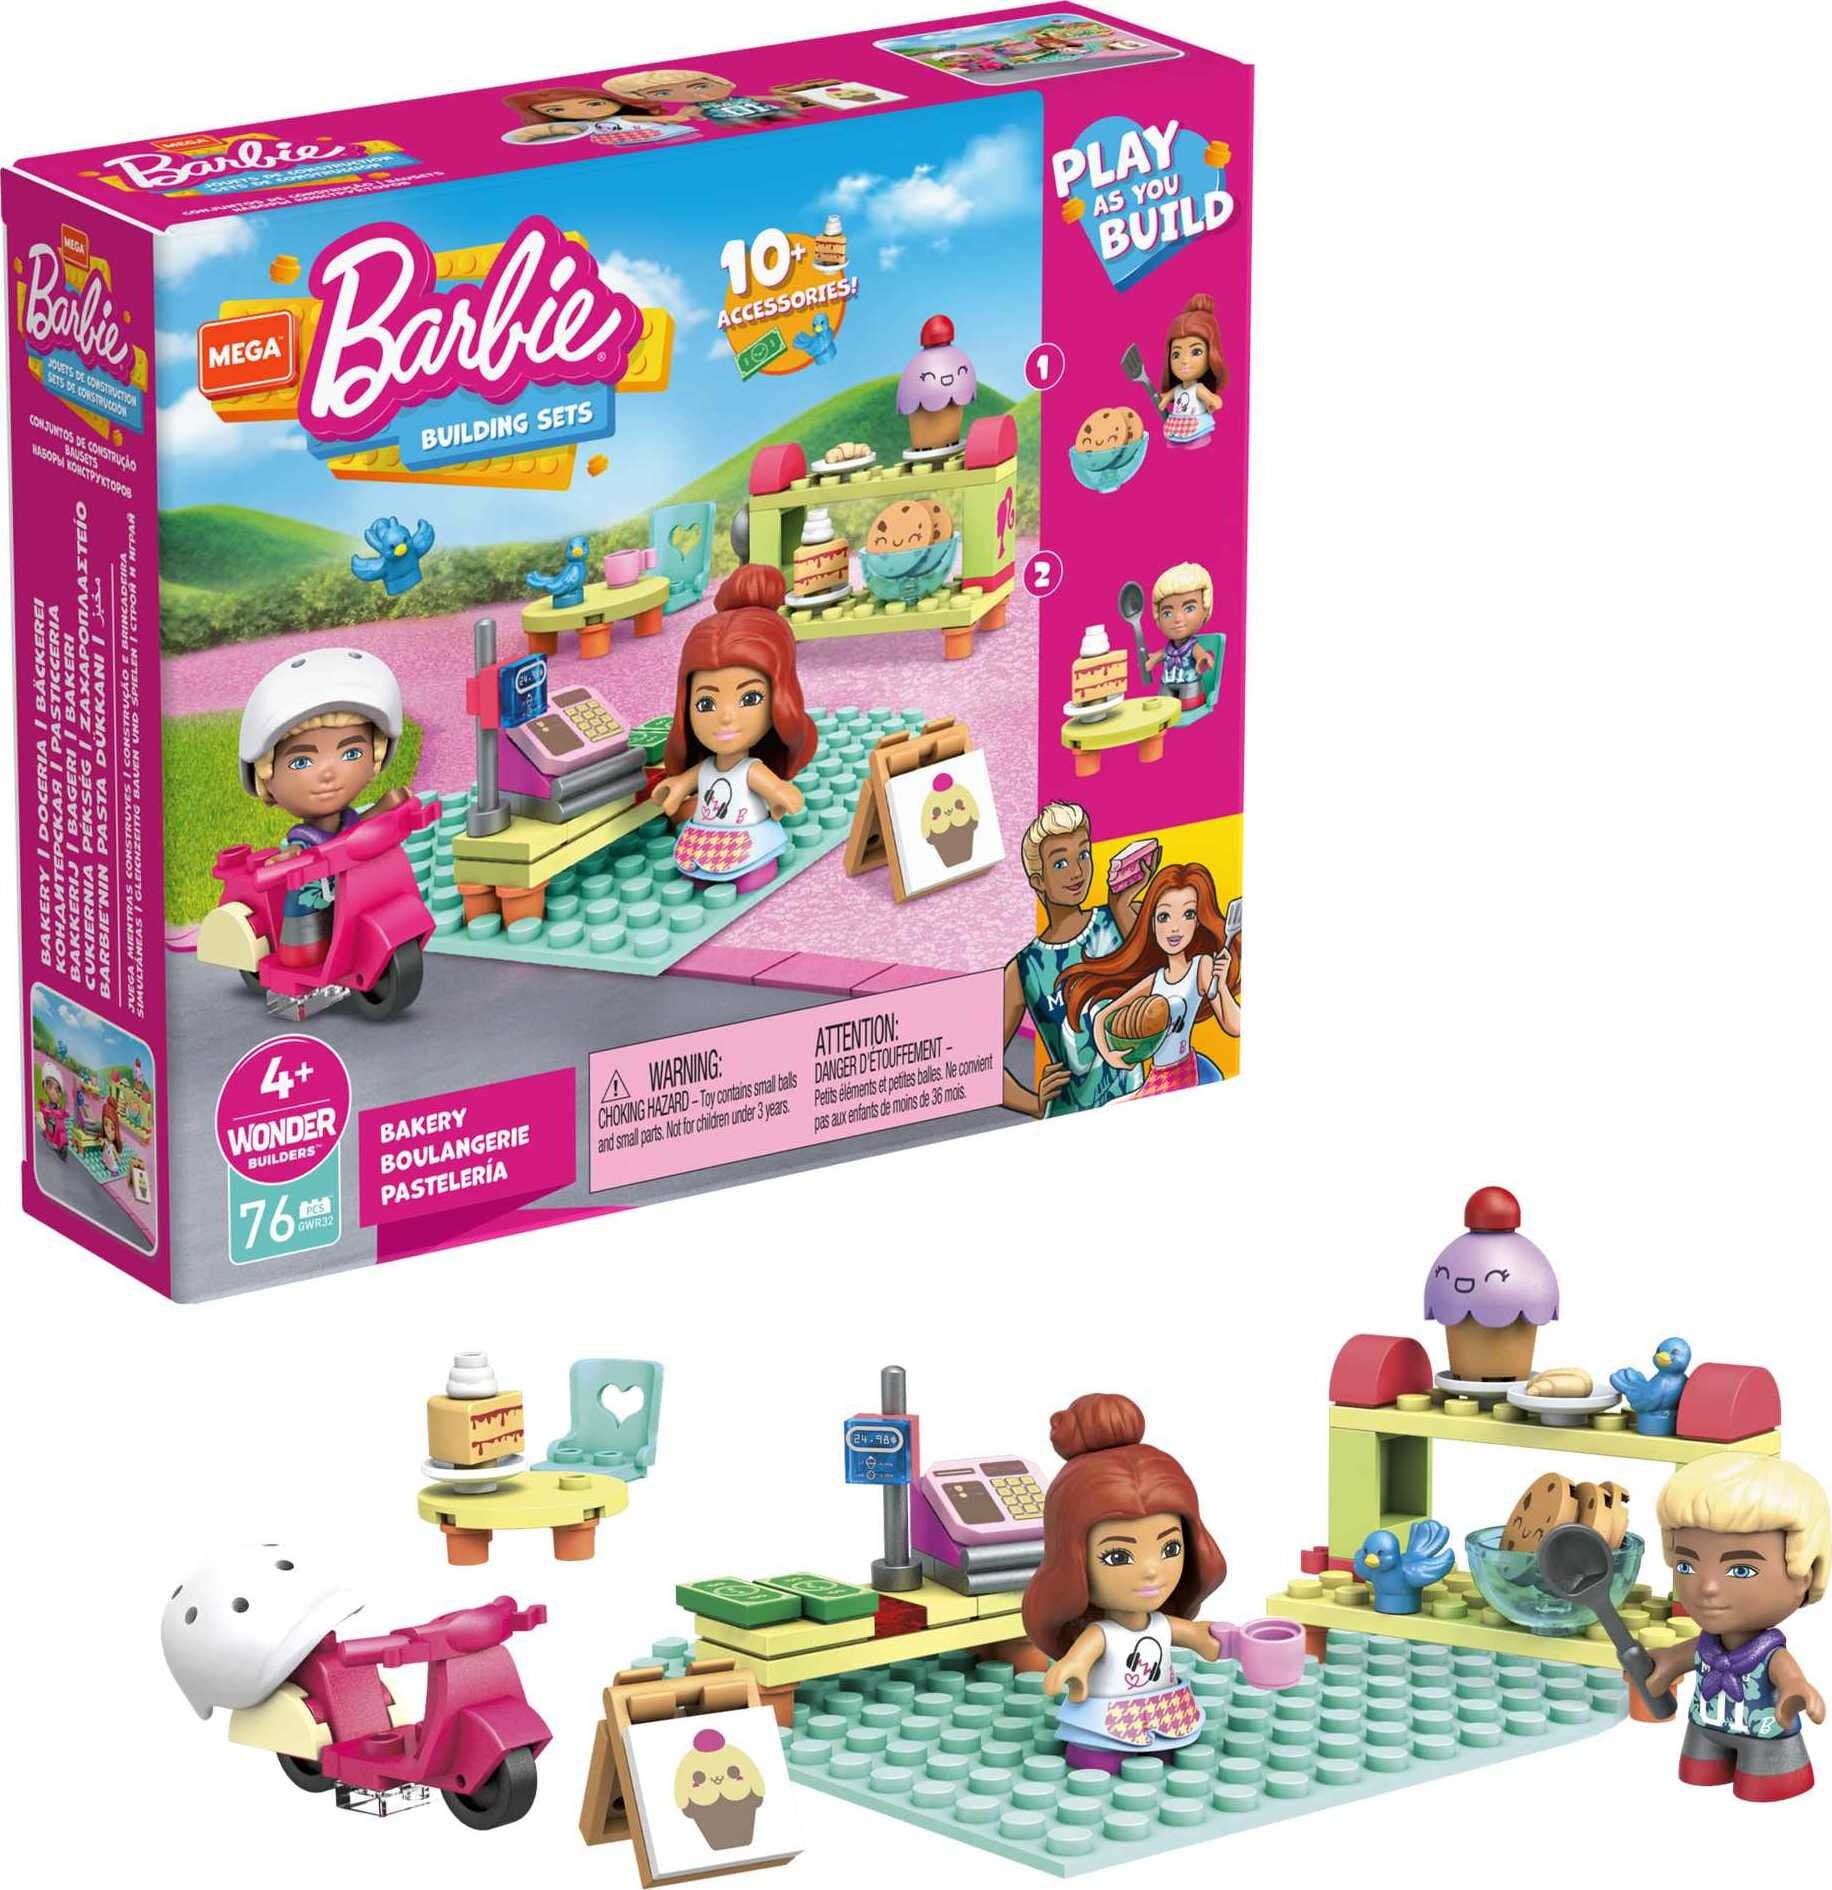 Derfor Udgående komponent Mega Construx Barbie Bakery GWR32 Building Set (76 Pieces) - Walmart.com